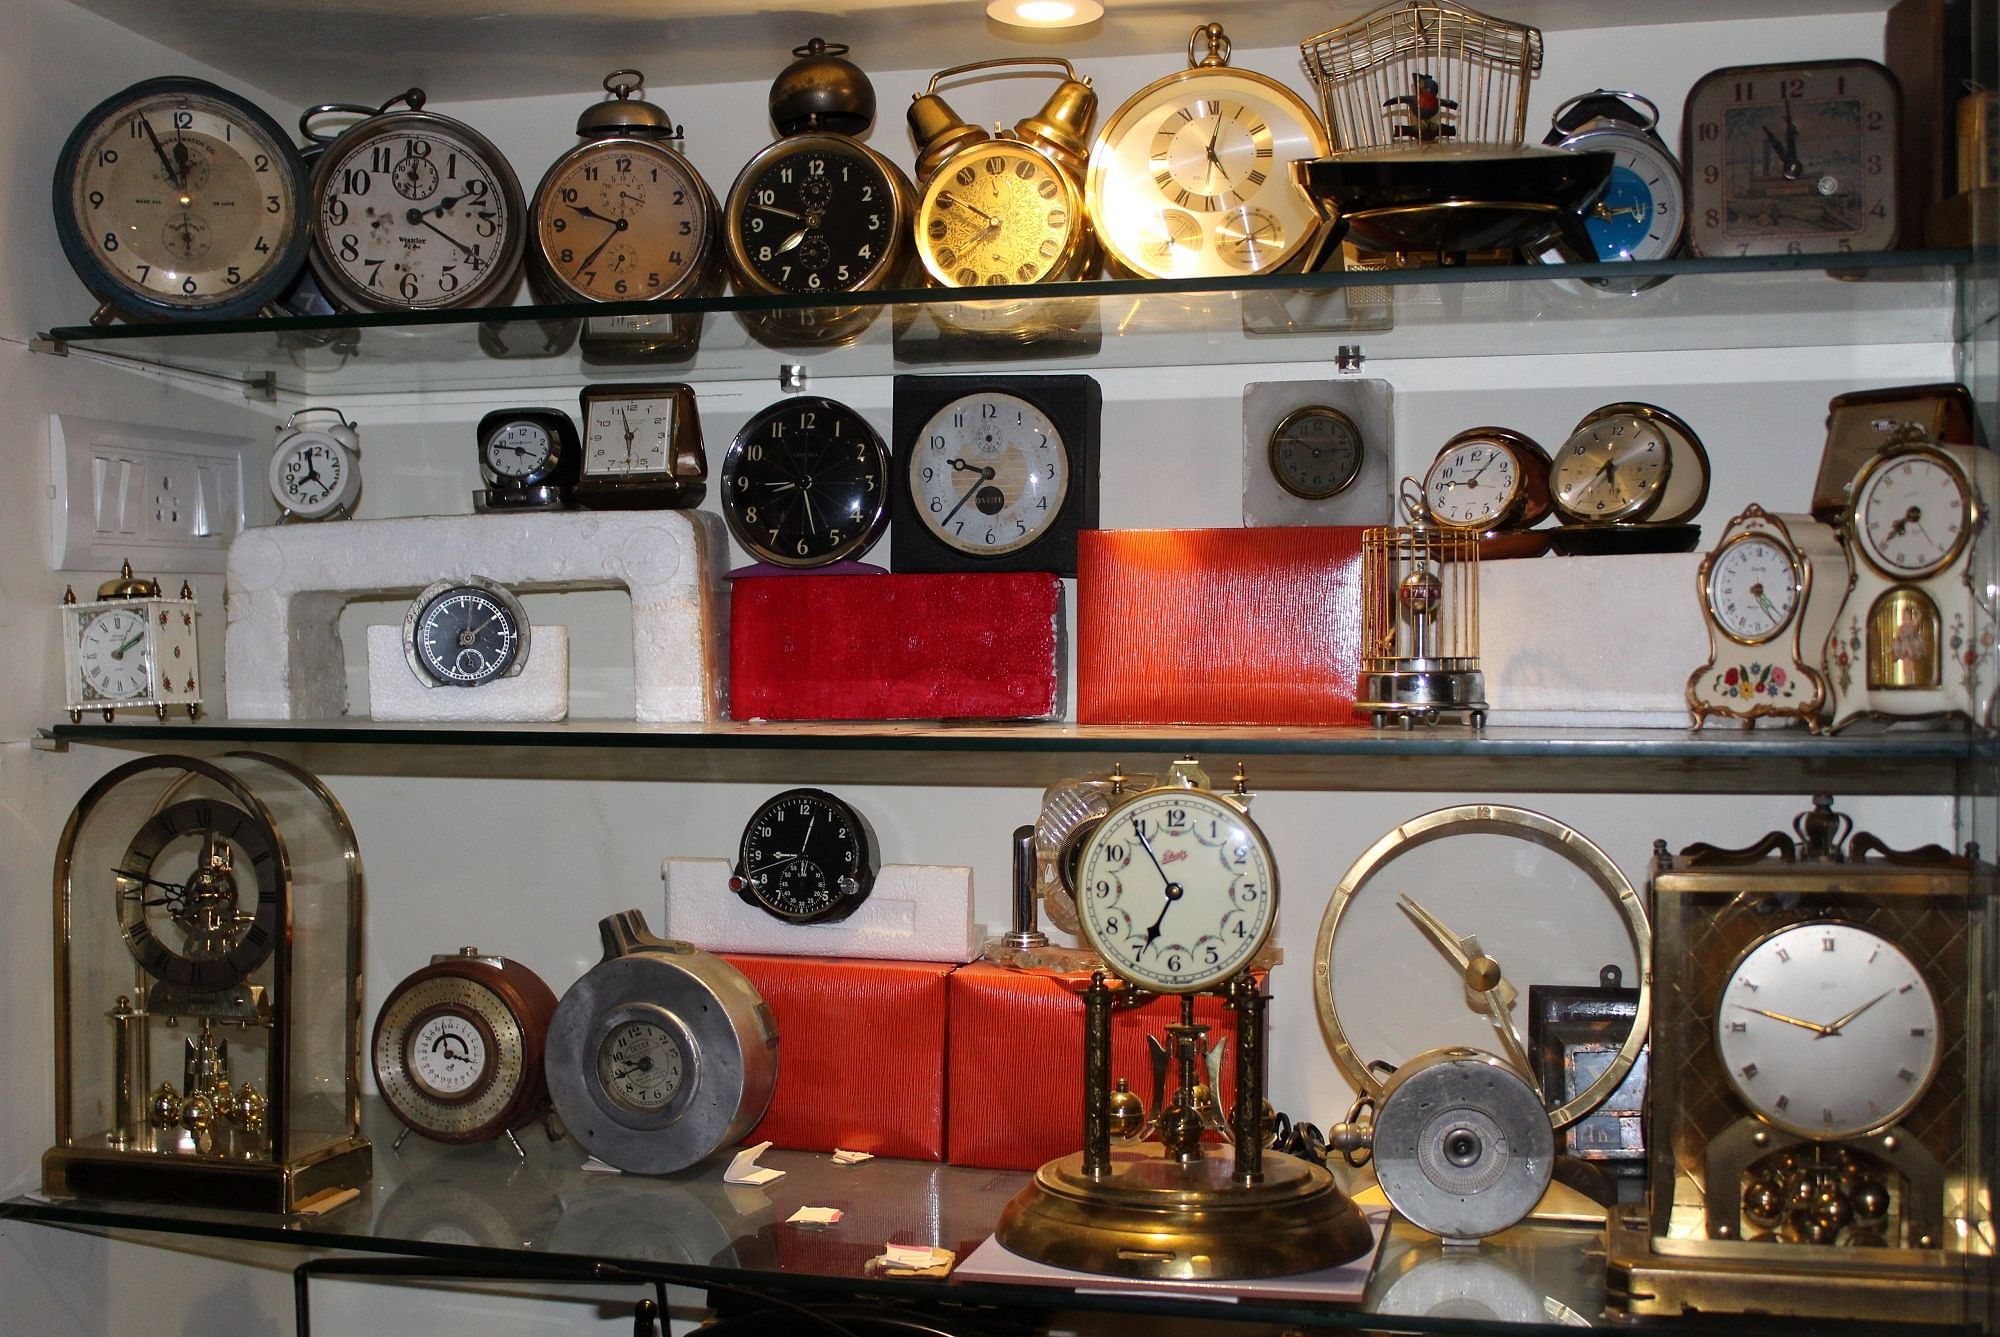 Chandrashekar collects vintage clocks. These require regular maintenance.